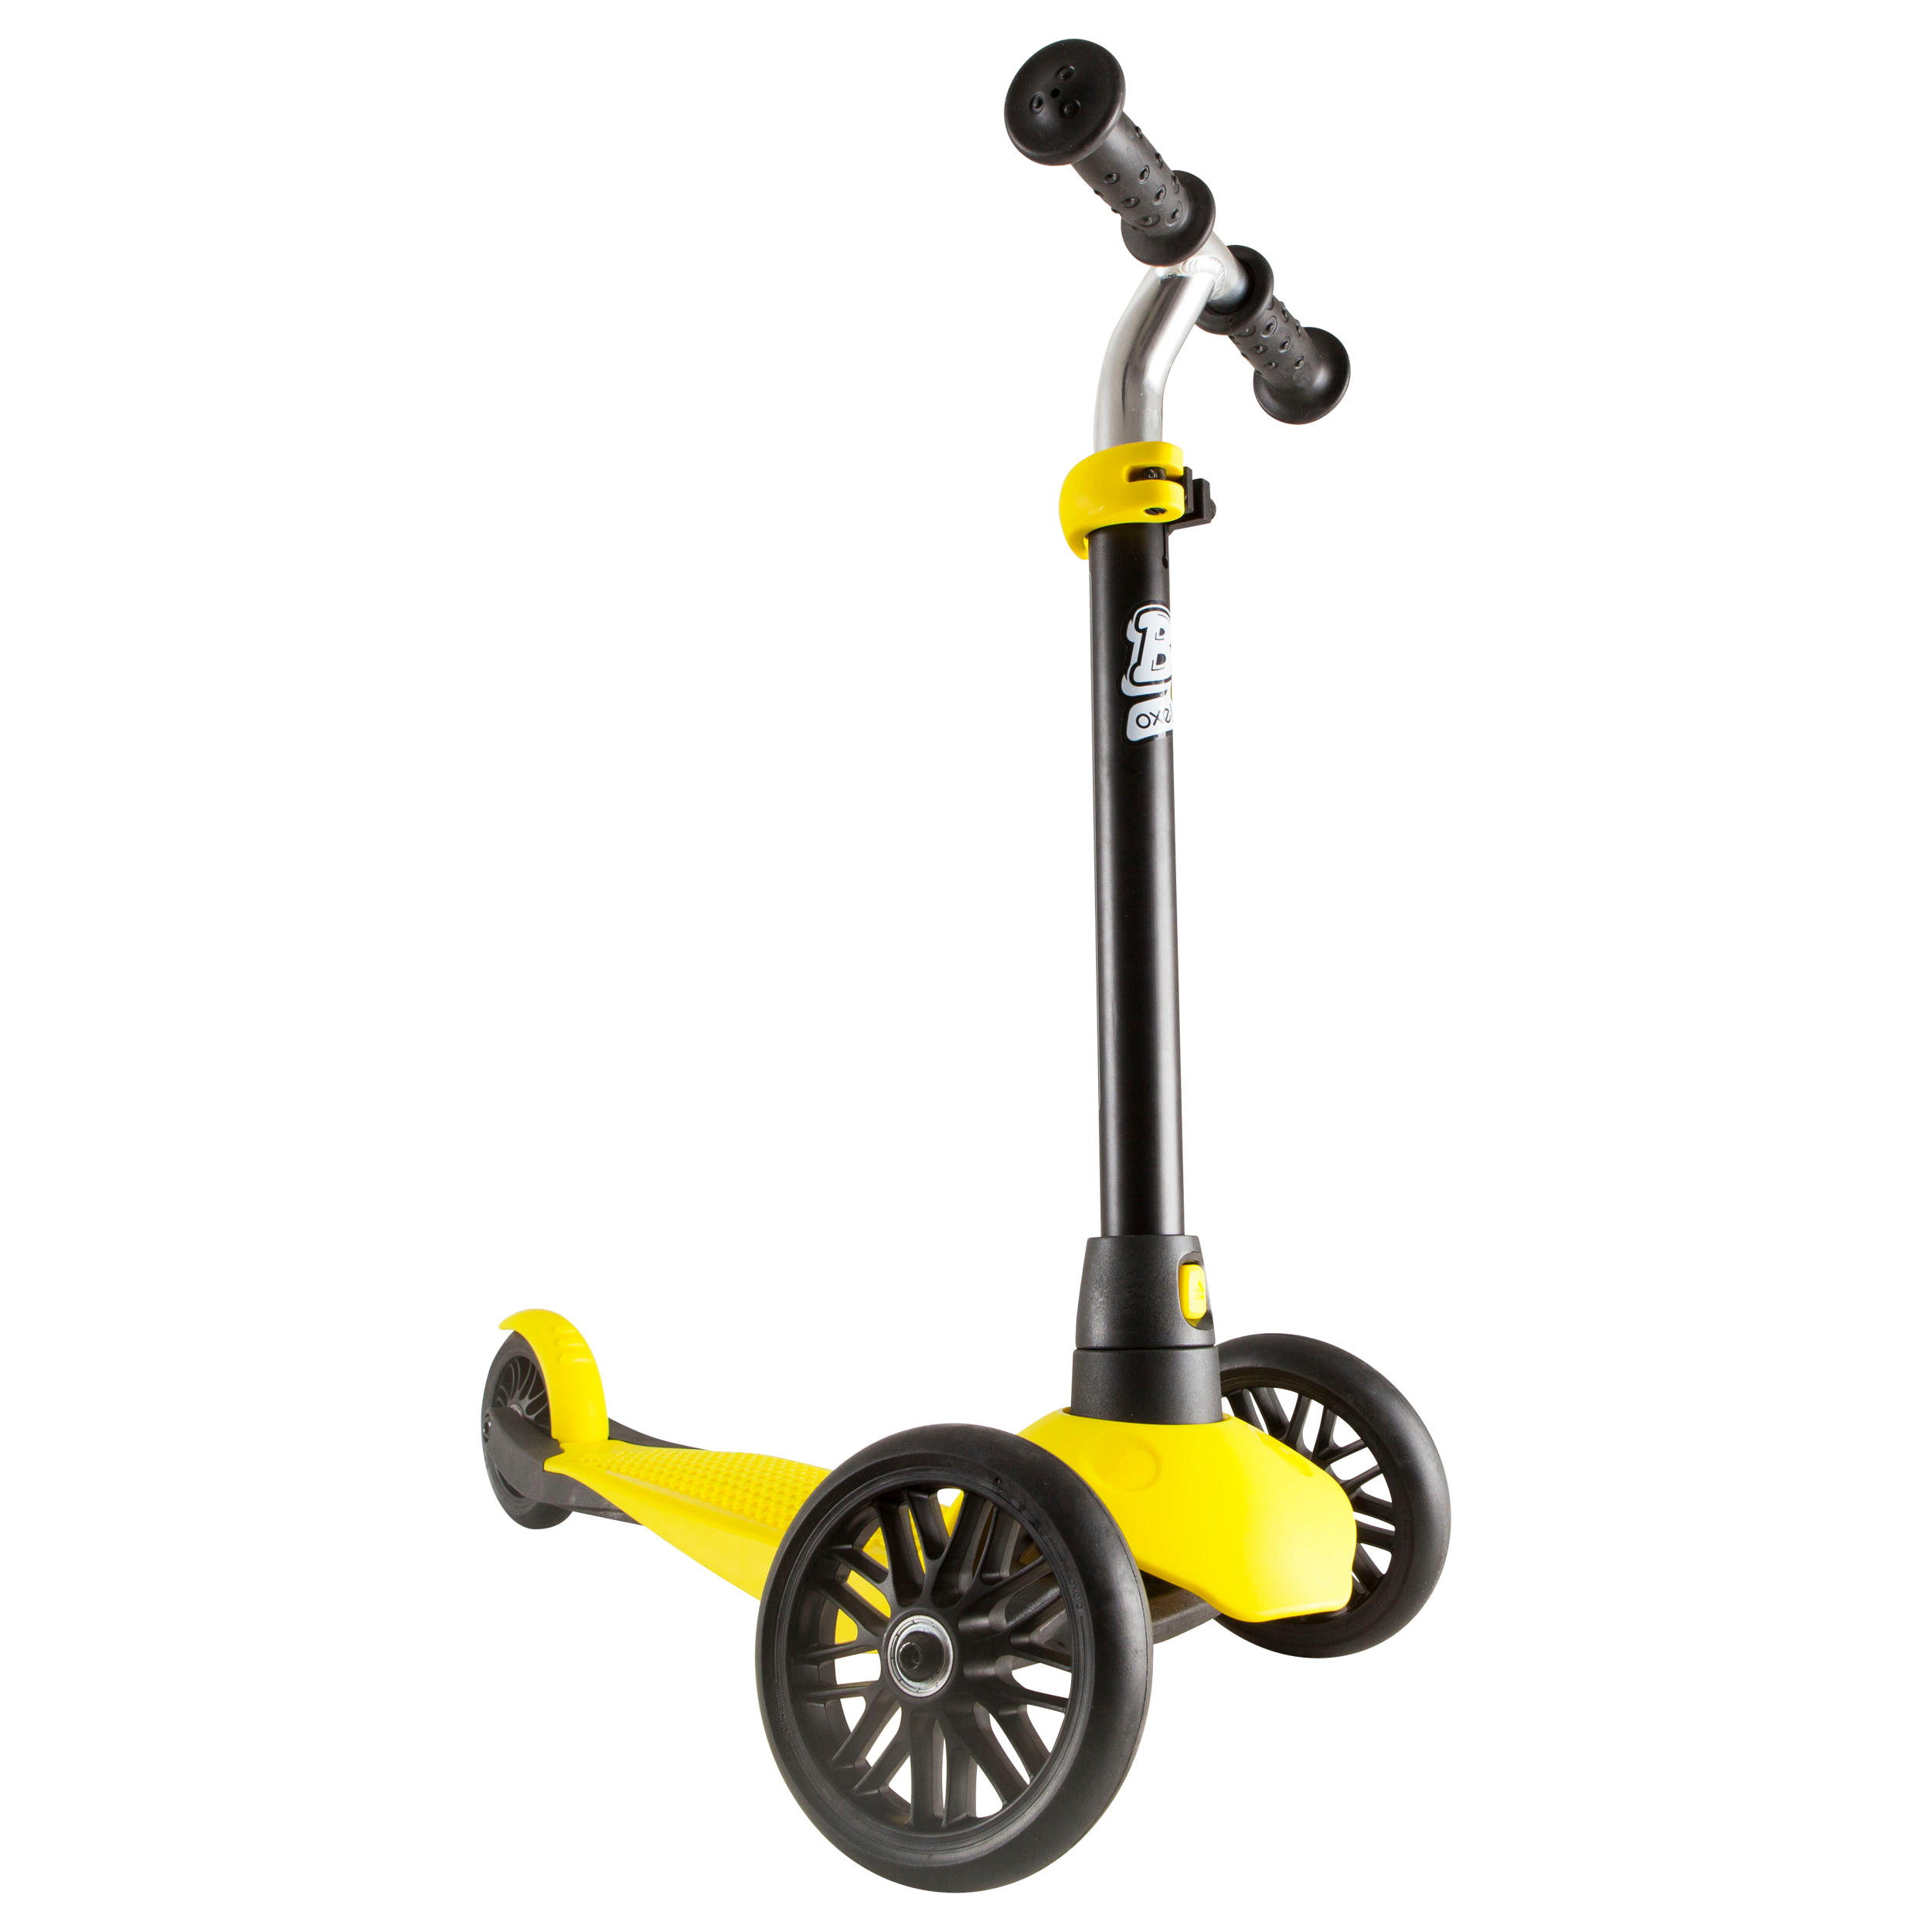 decathlon scooter price